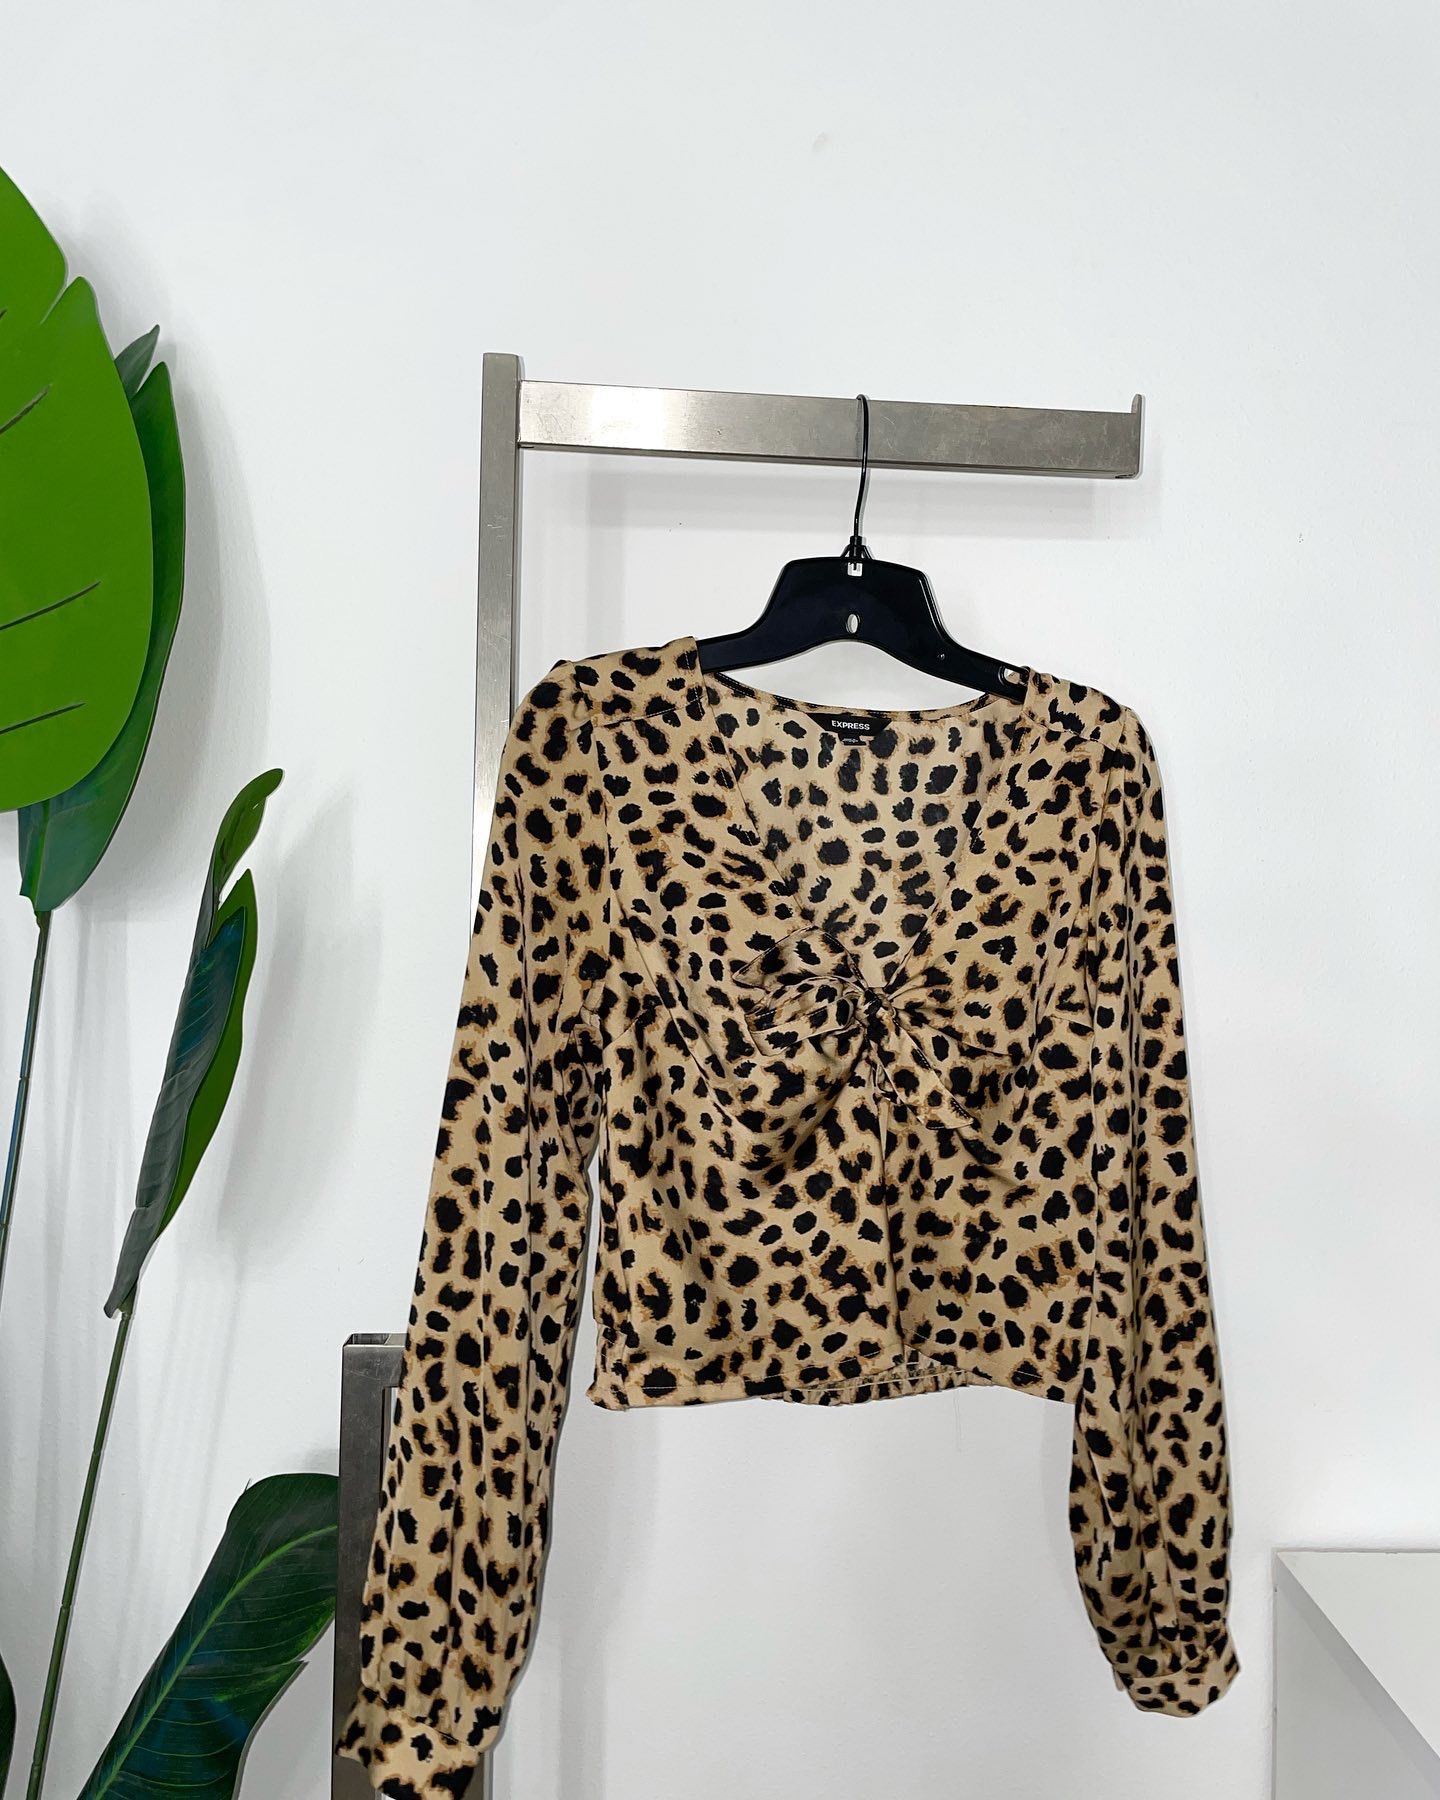 EXPRESS Cheetah Print Top Size Small